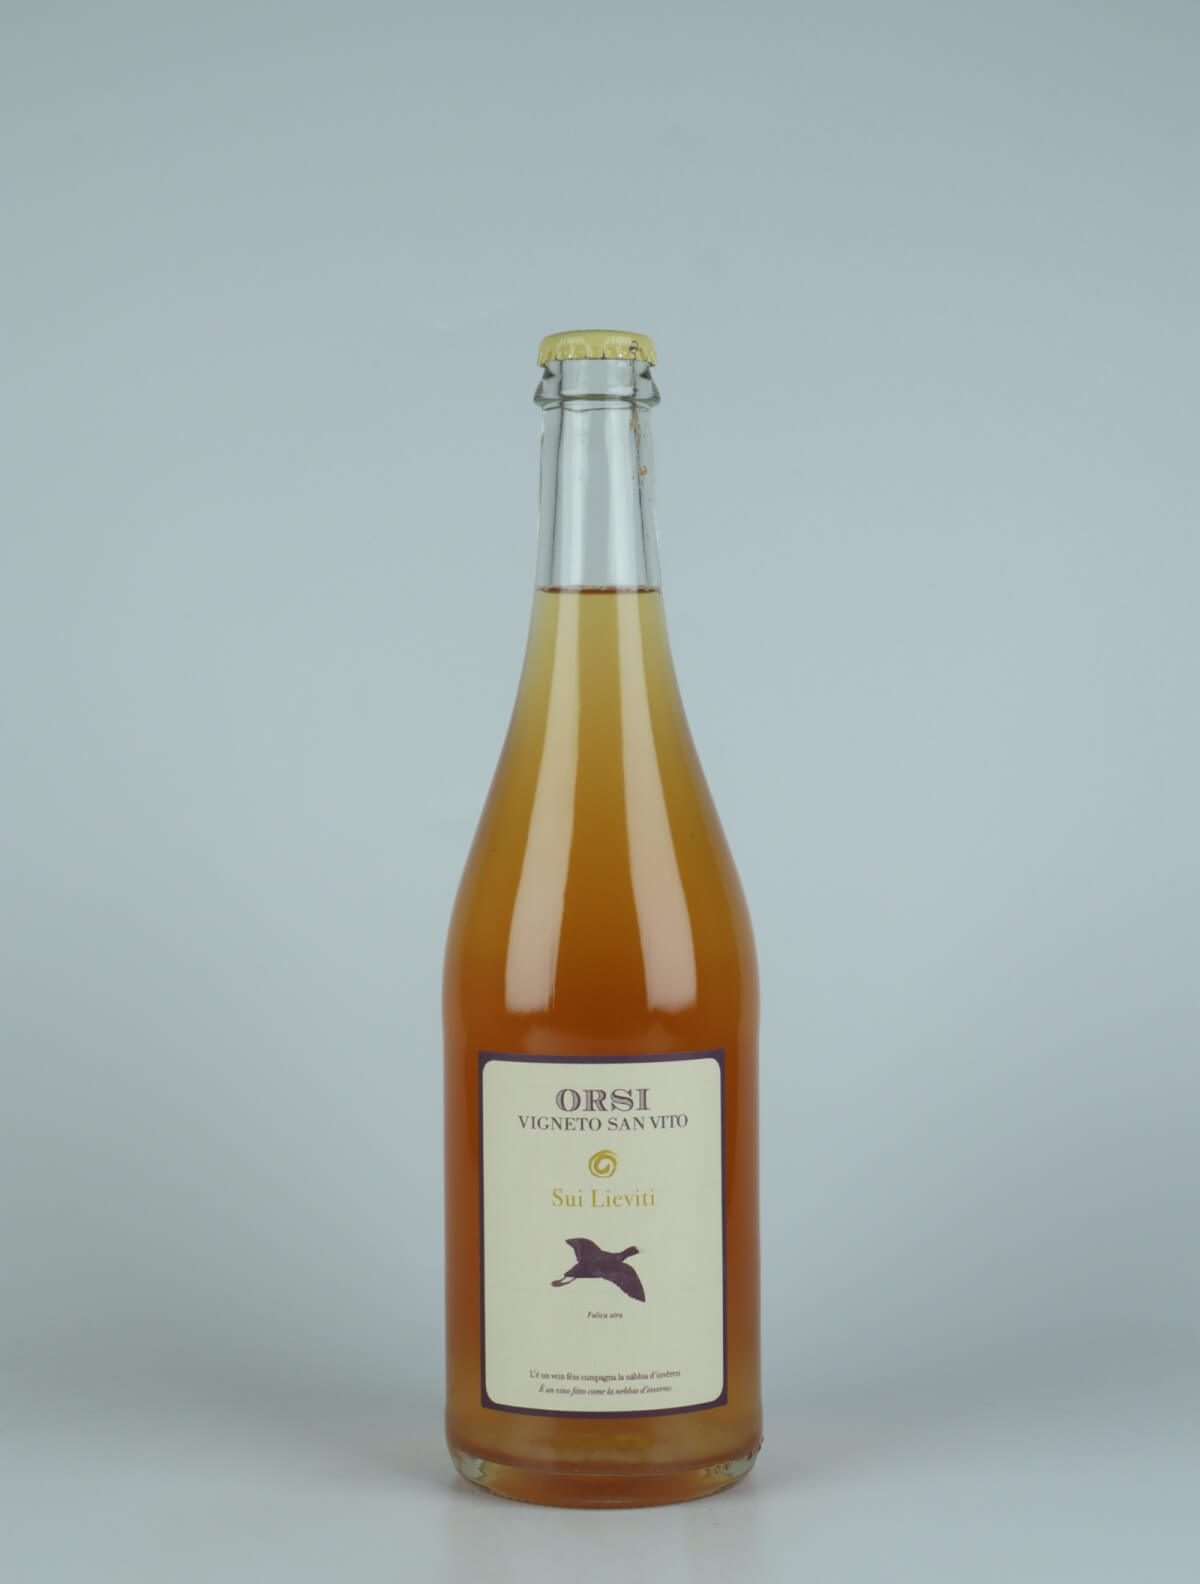 A bottle 2021 Sui Lieviti Sparkling from Orsi - San Vito, Emilia-Romagna in Italy